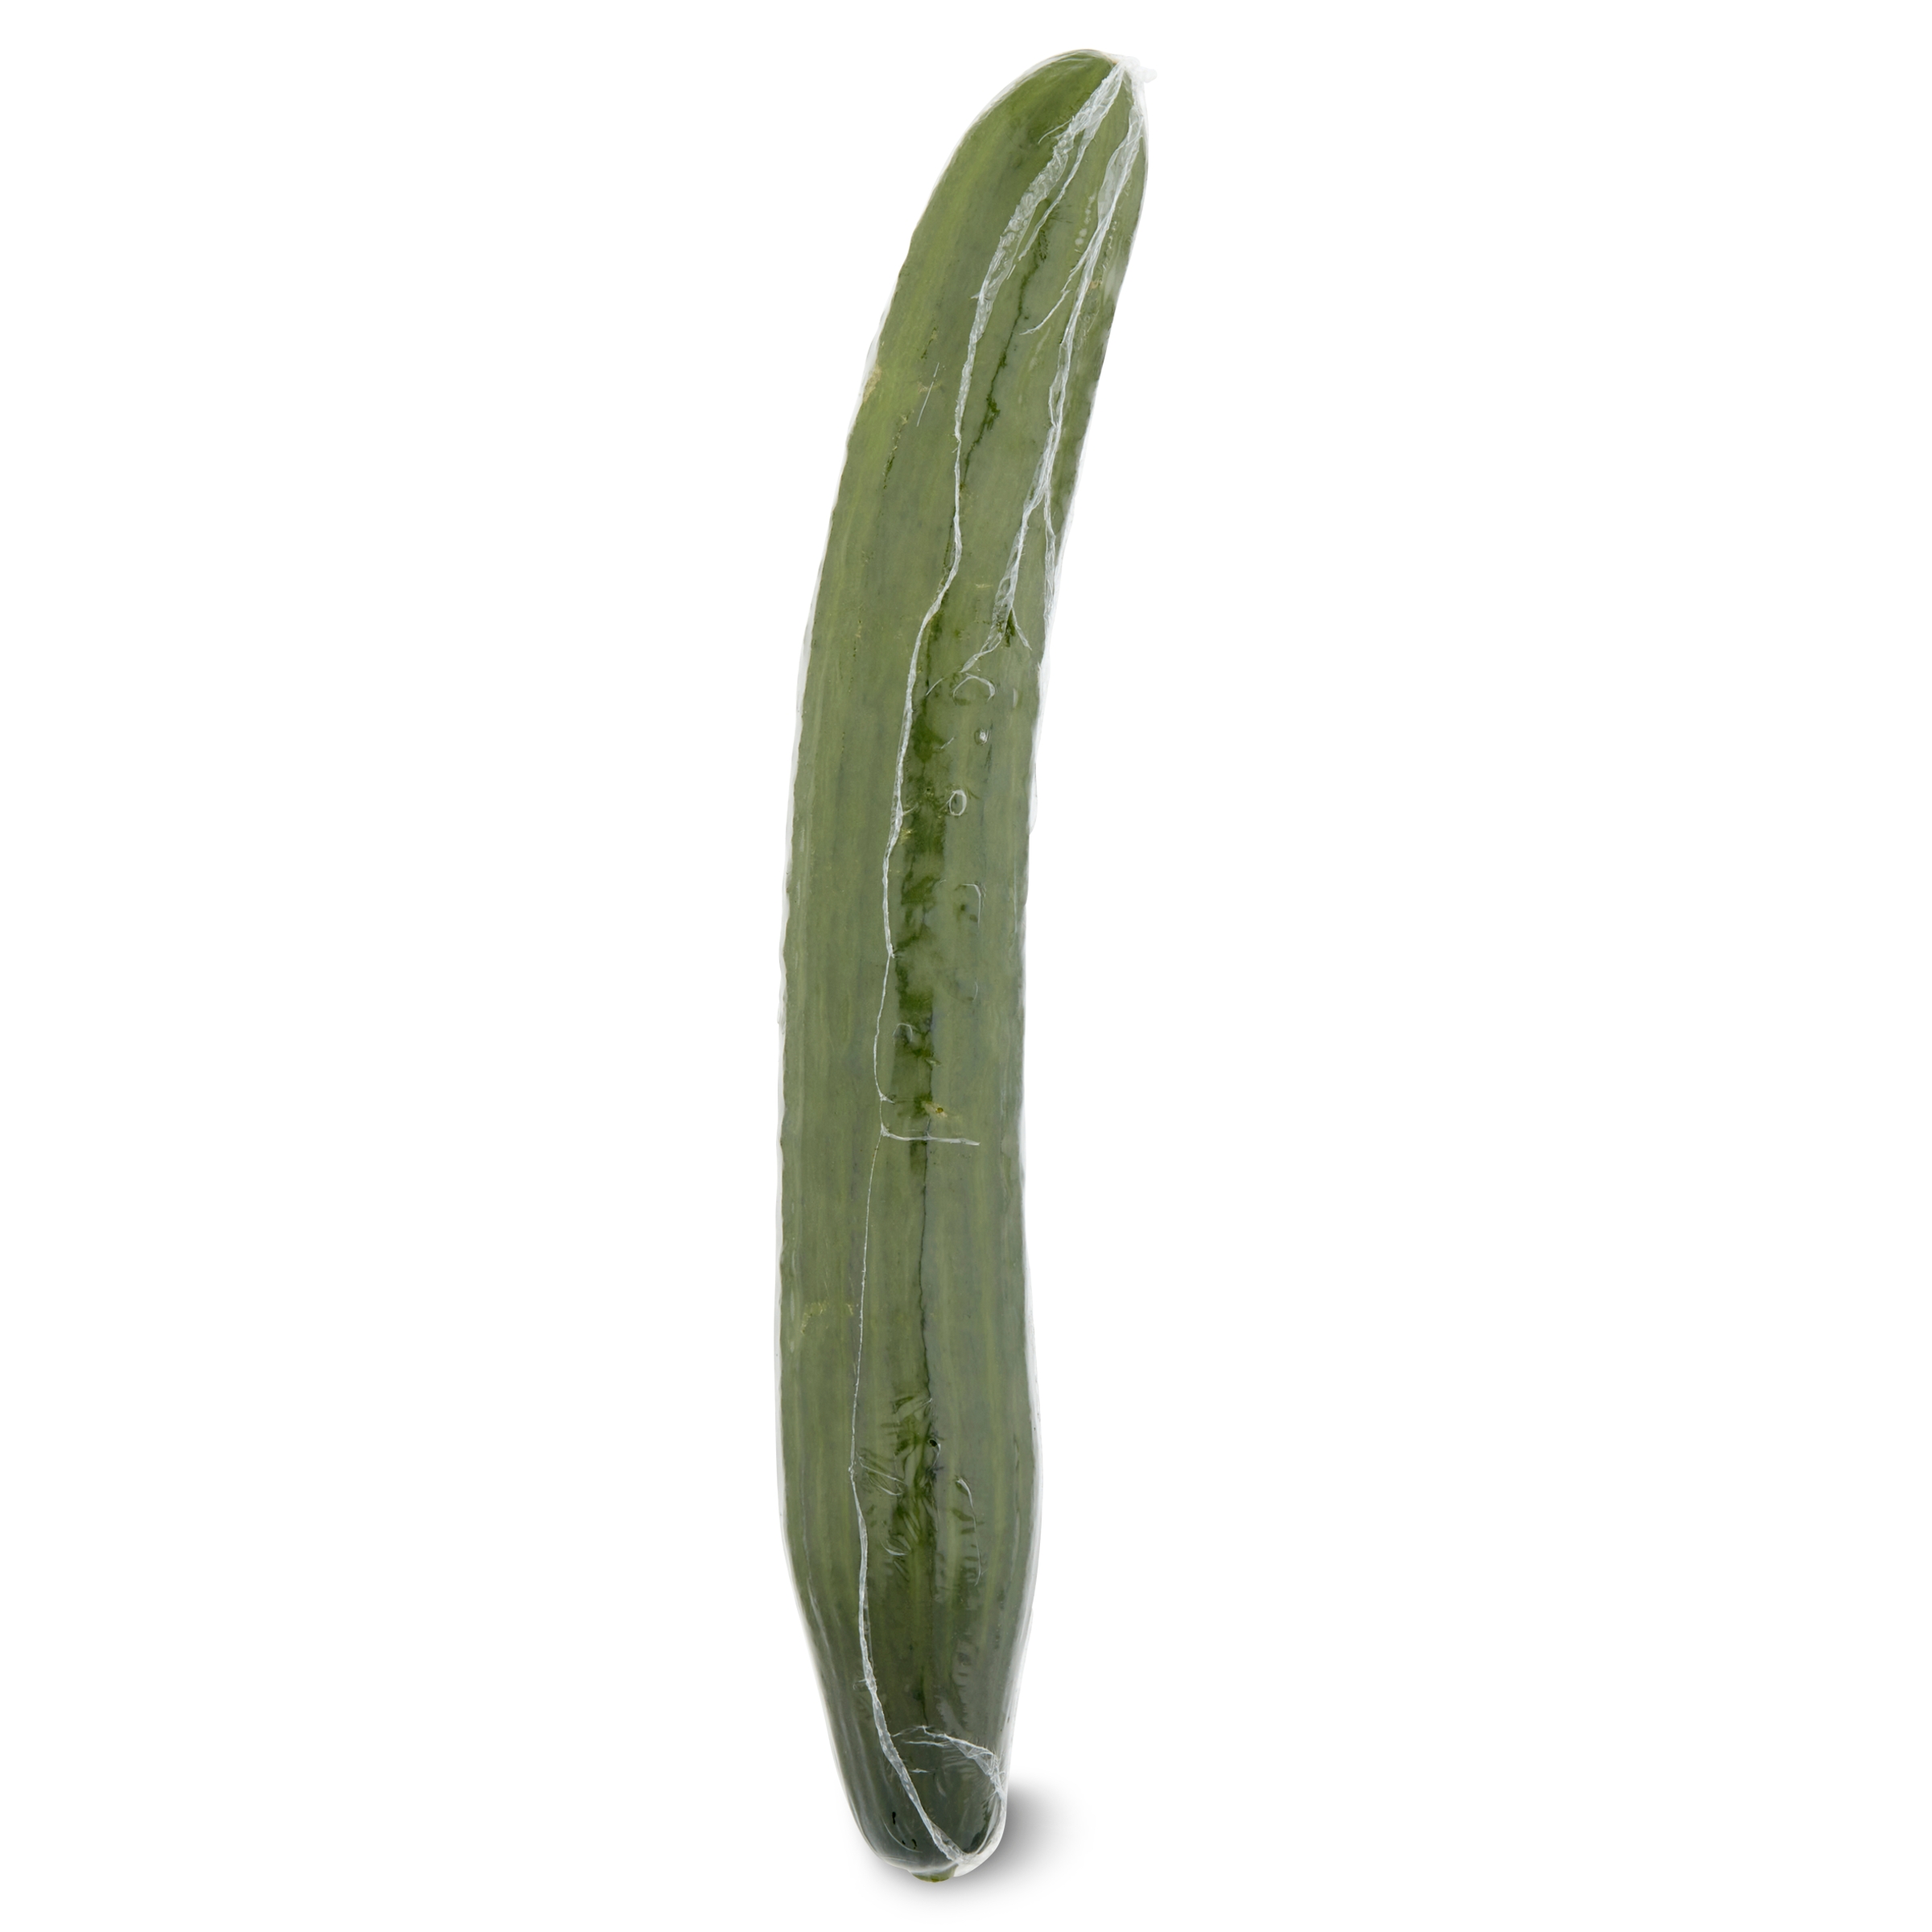 Fresh Long English Cucumber, Each - image 1 of 4